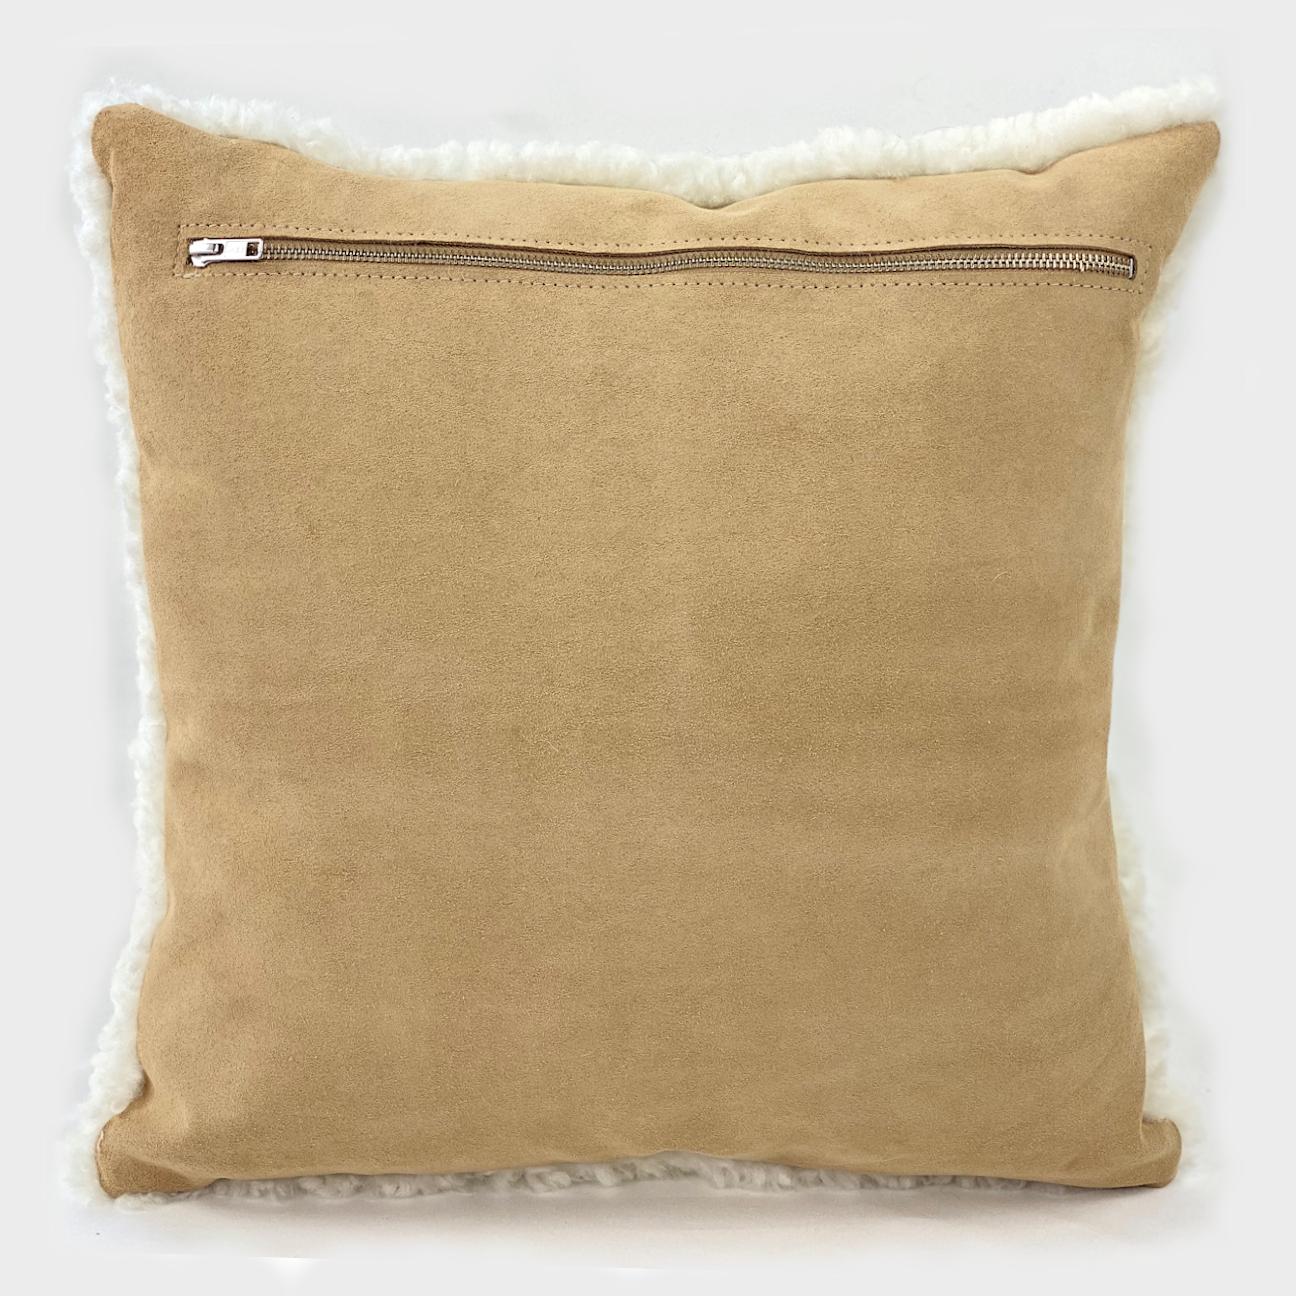 Australian Shearling Pillow, White Sheepskin Square 18x18